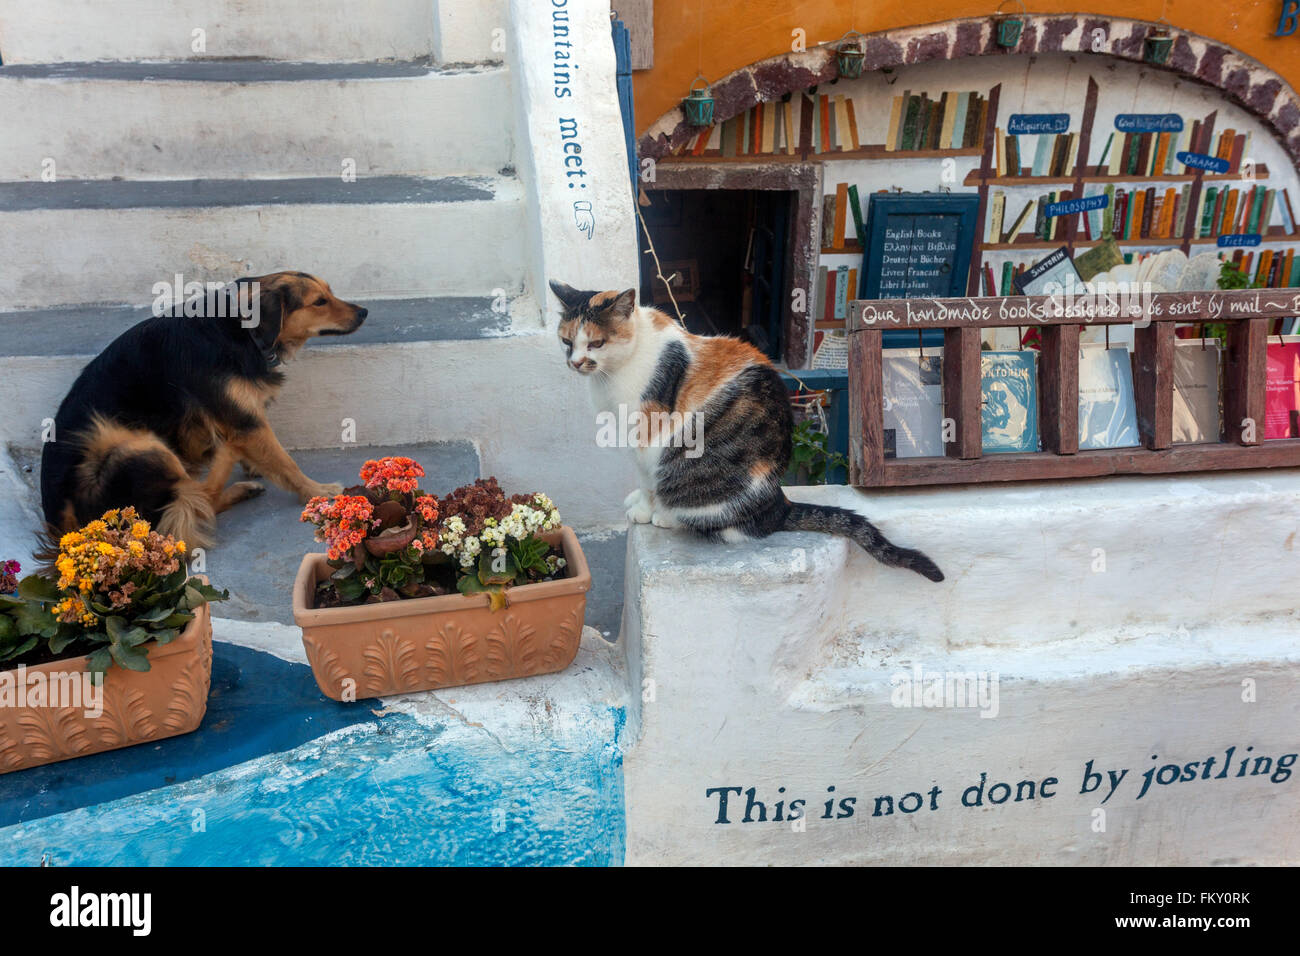 Oia, Santorini, cat, and dog, street view, bookshop Atlantis Greece Stock Photo